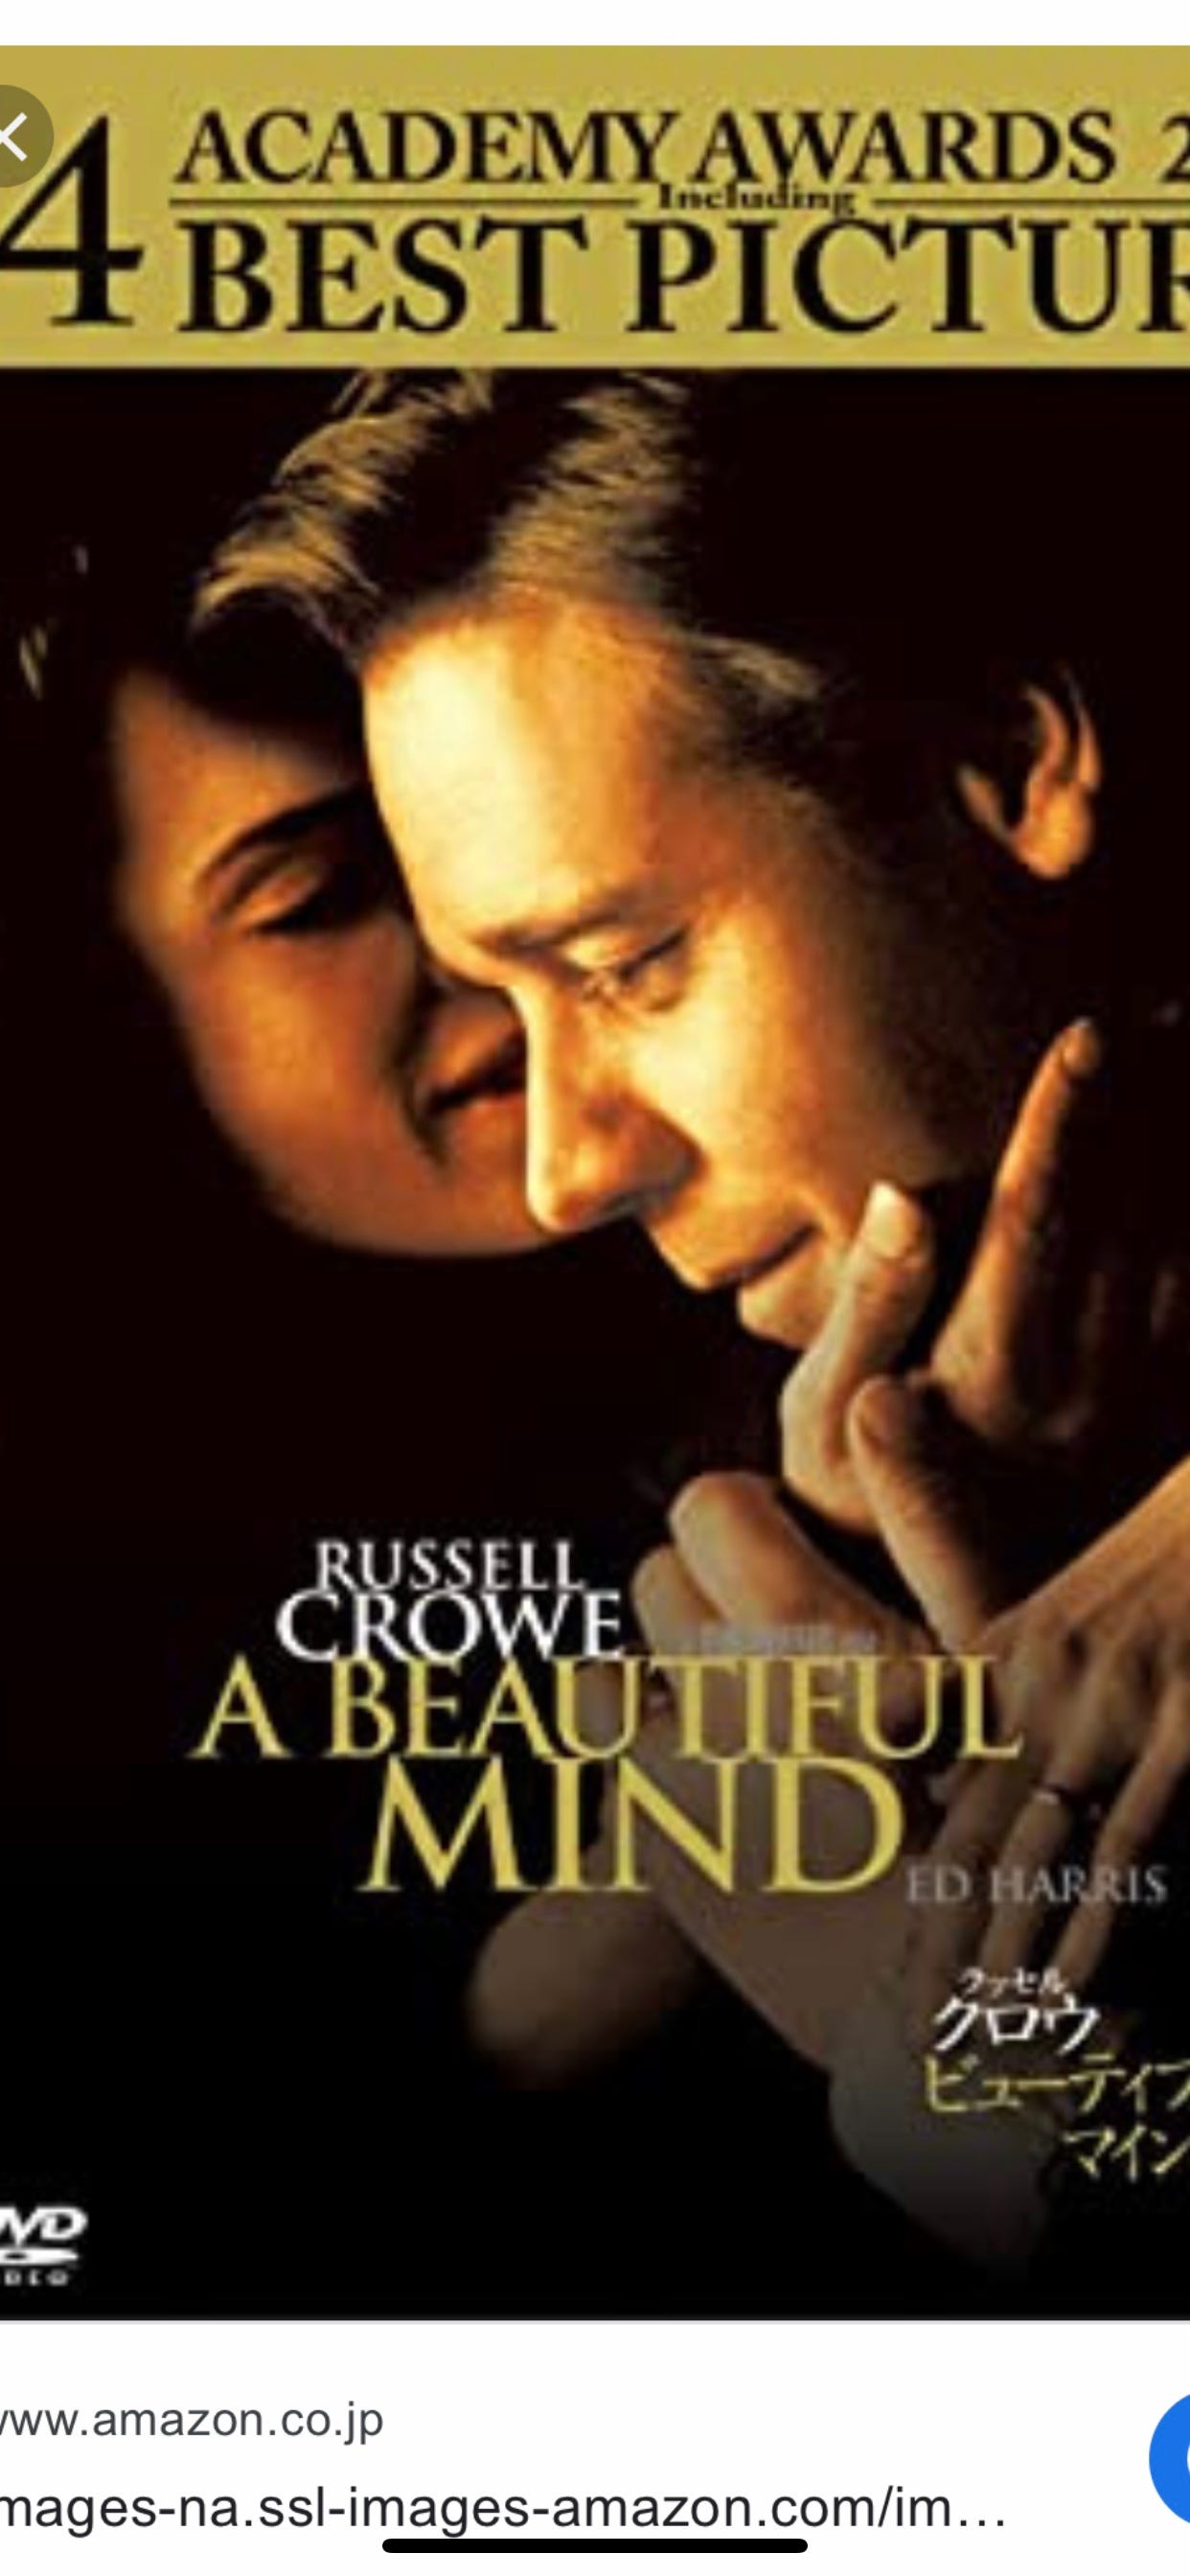 A Beautiful Mind Movie And Nash Equilibrium By é«˜æ©‹ æ